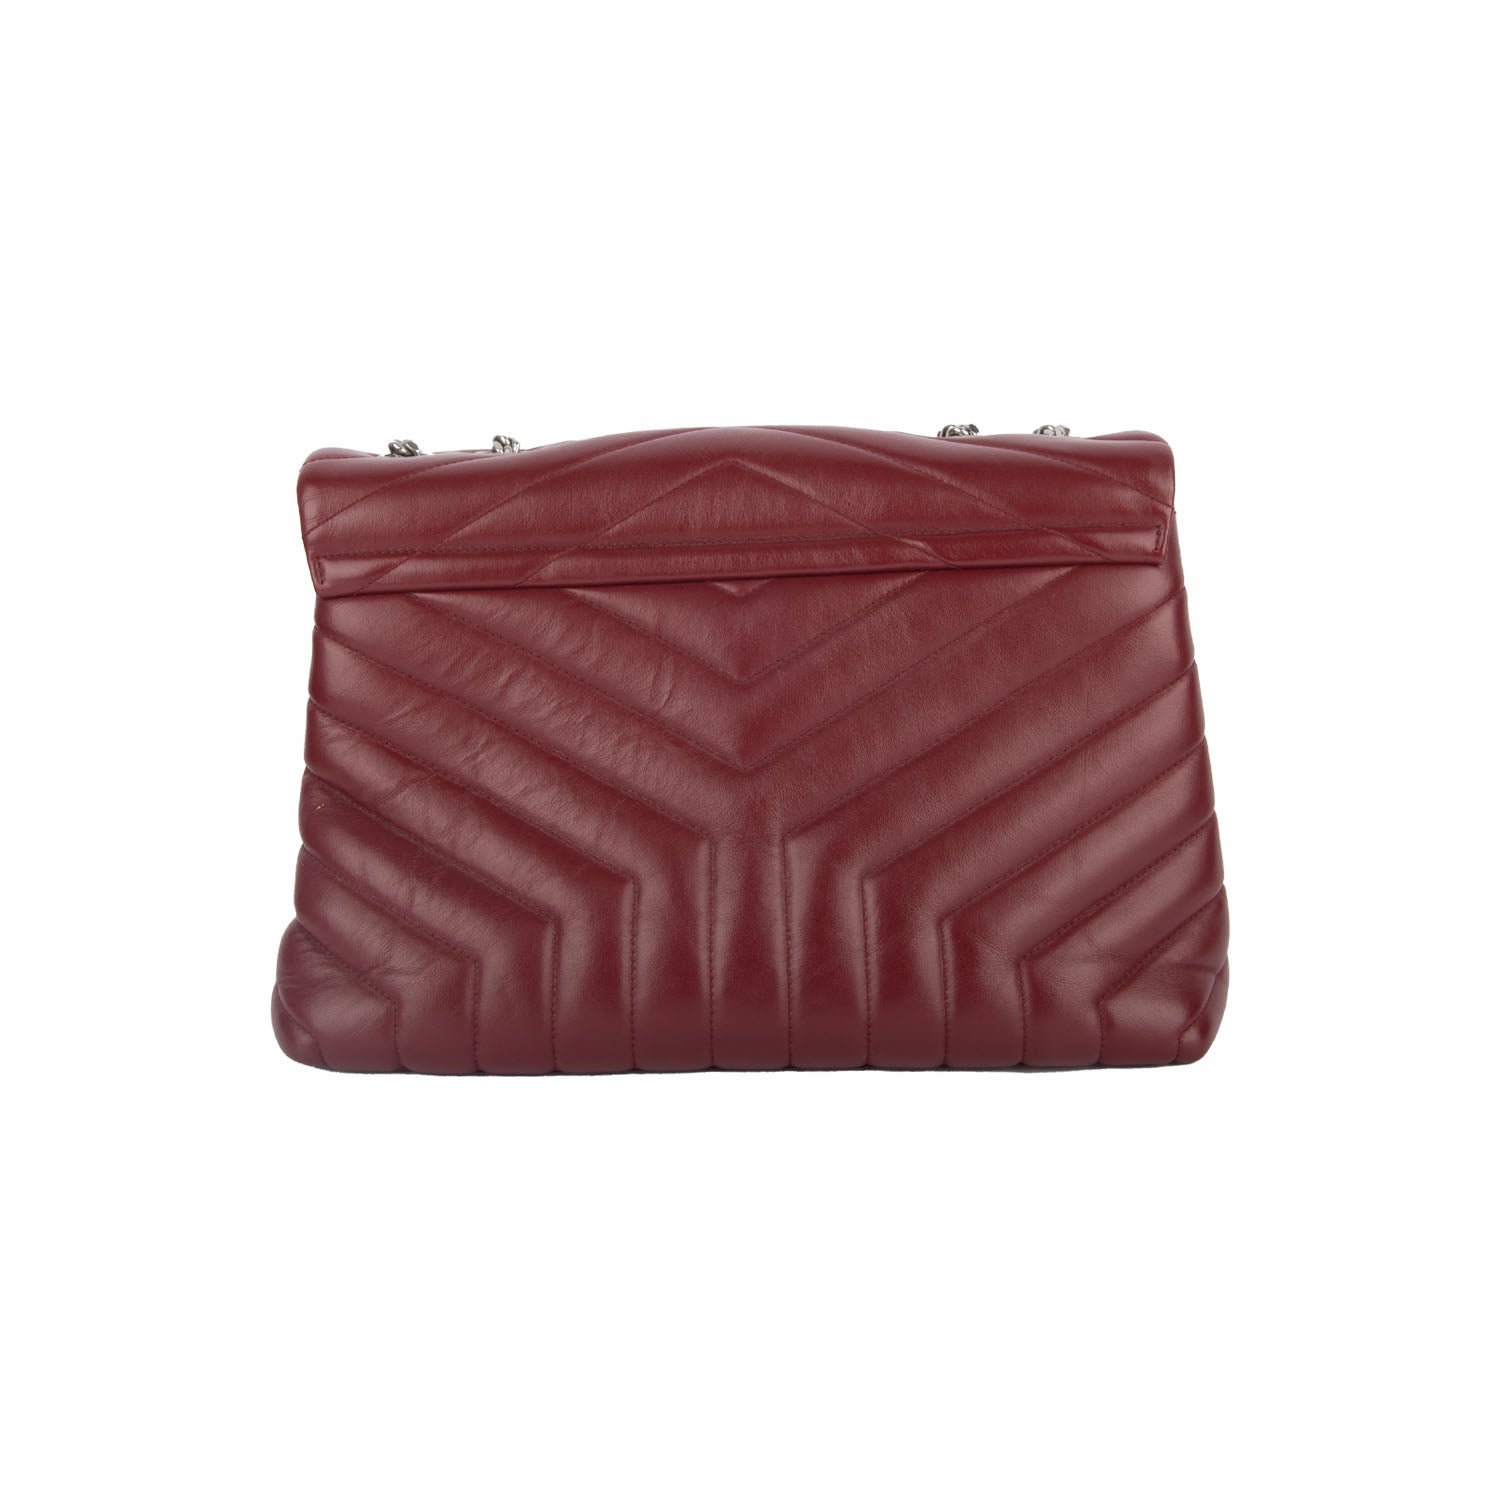 Monogram Loulou Matelasse Vitello Piumotto Red Calfskin Leather Bag